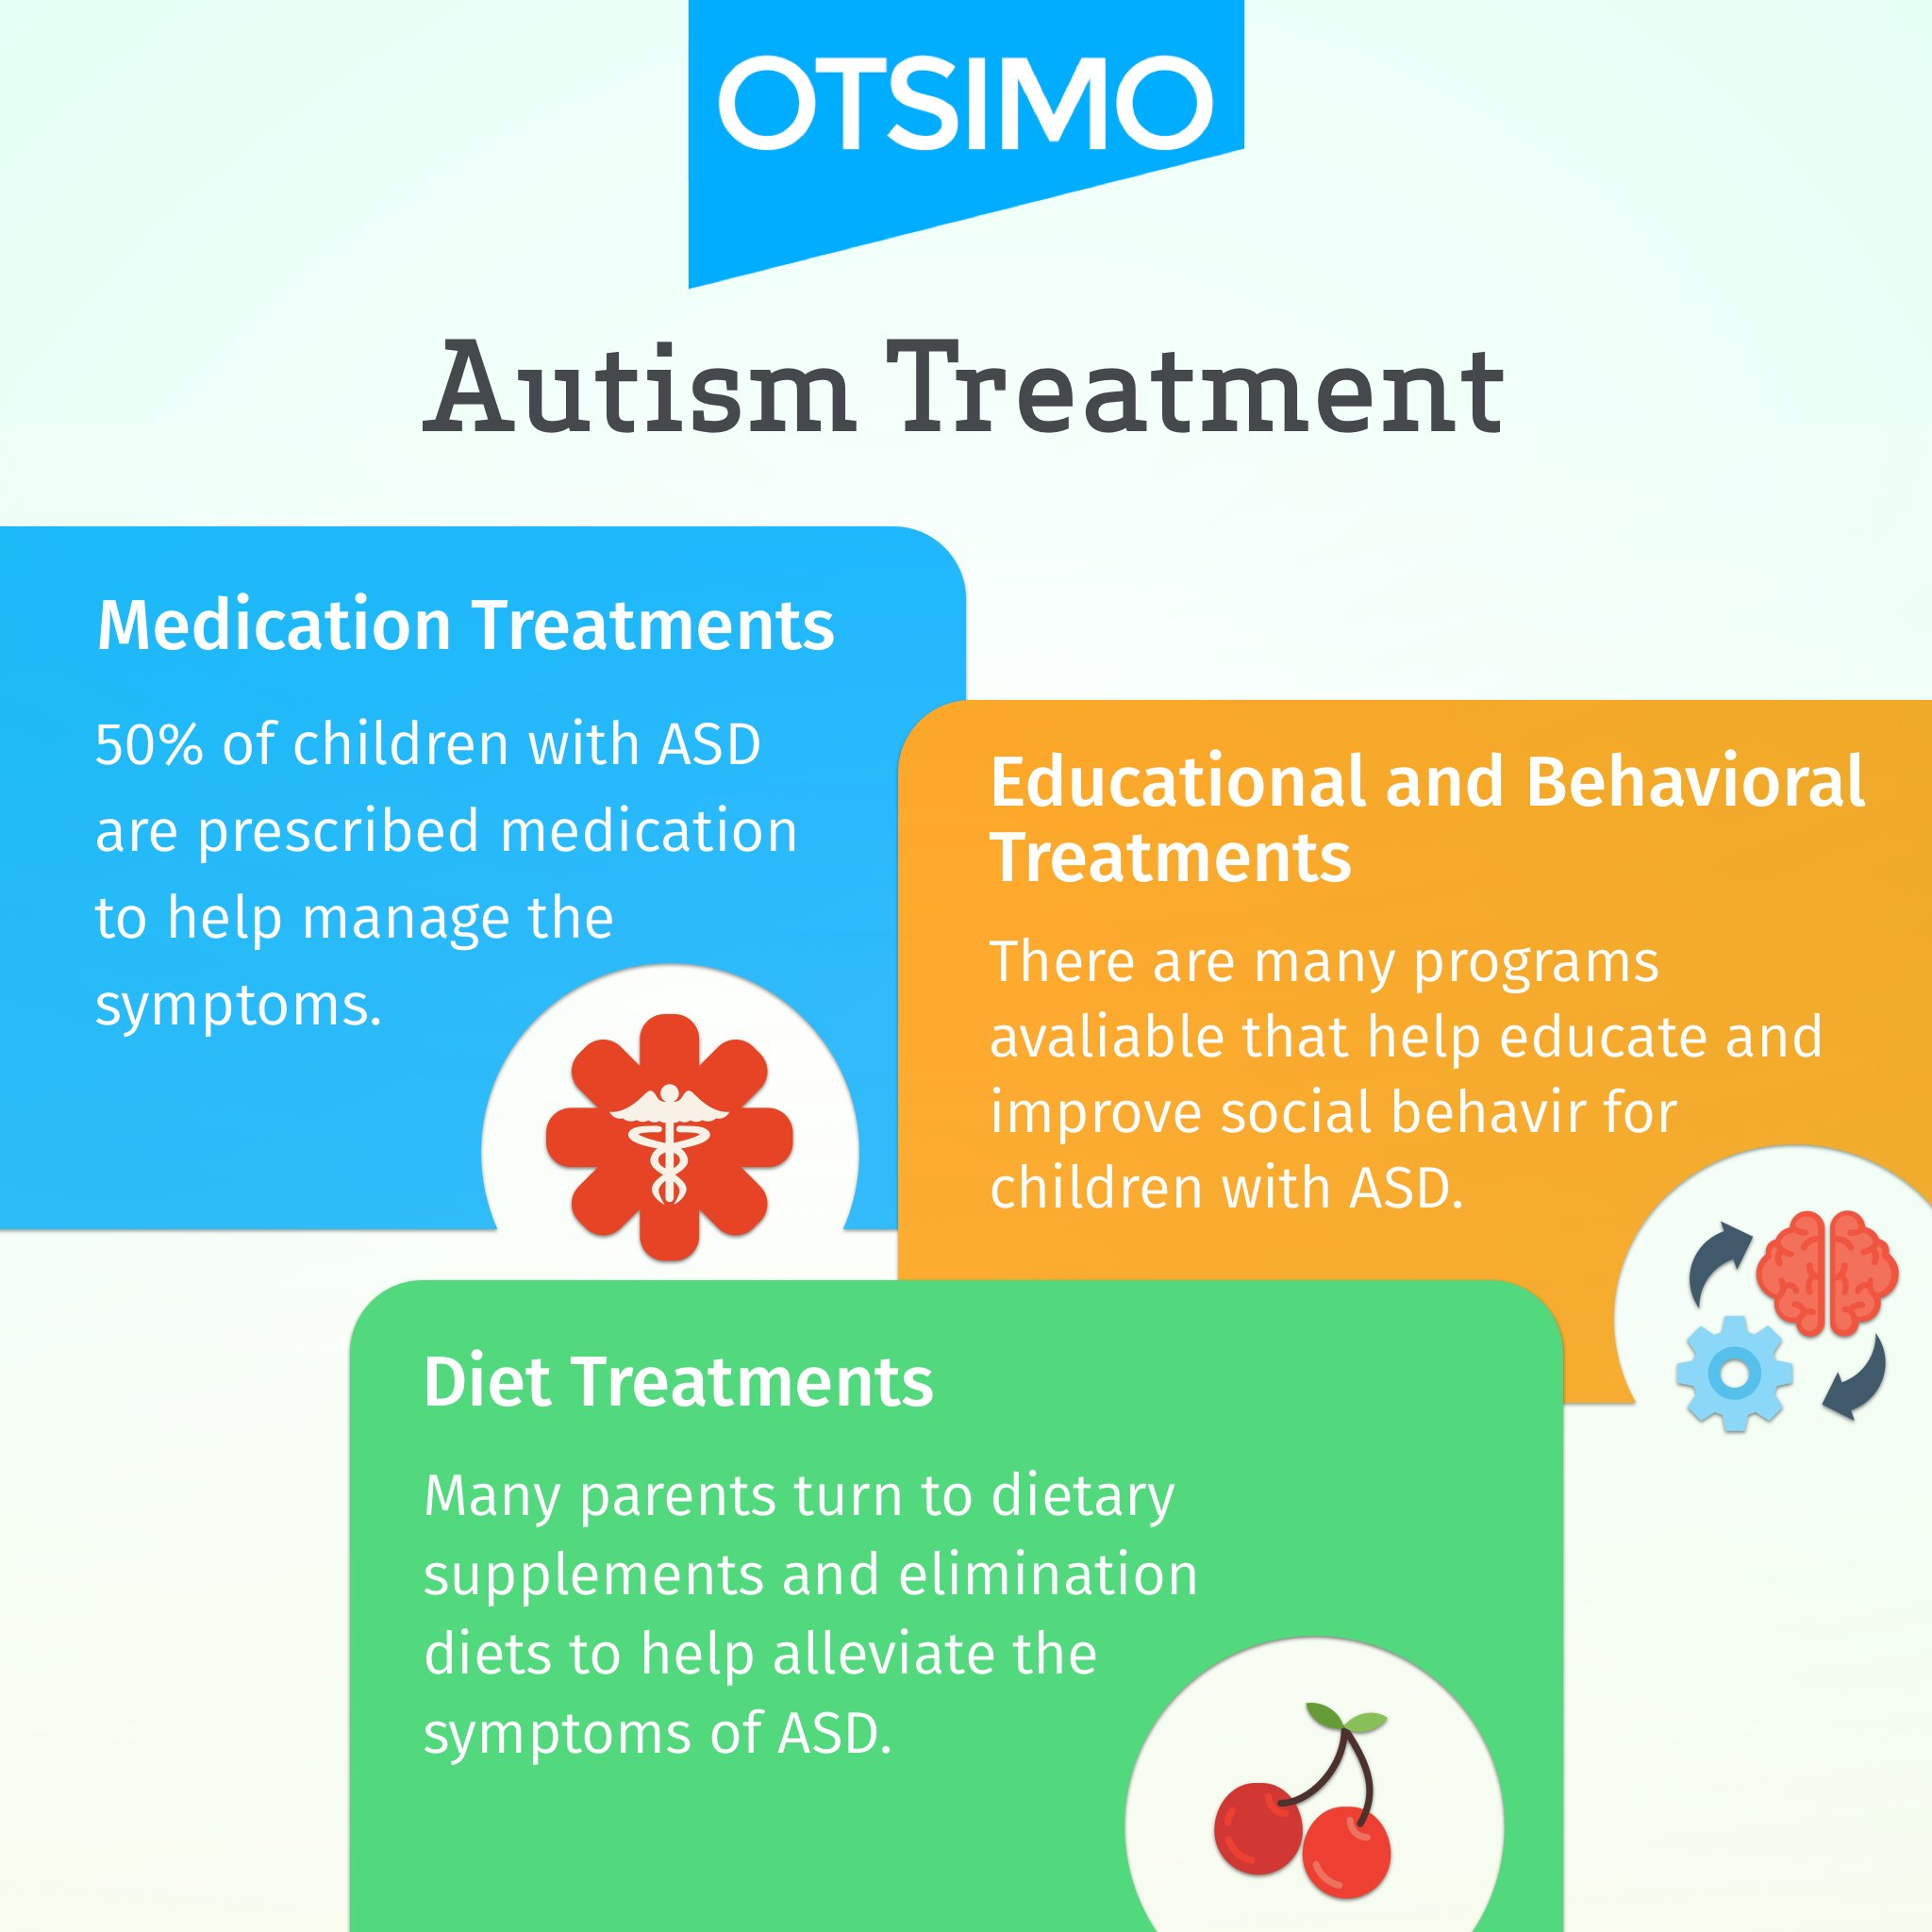 Treatment Practices for Autism